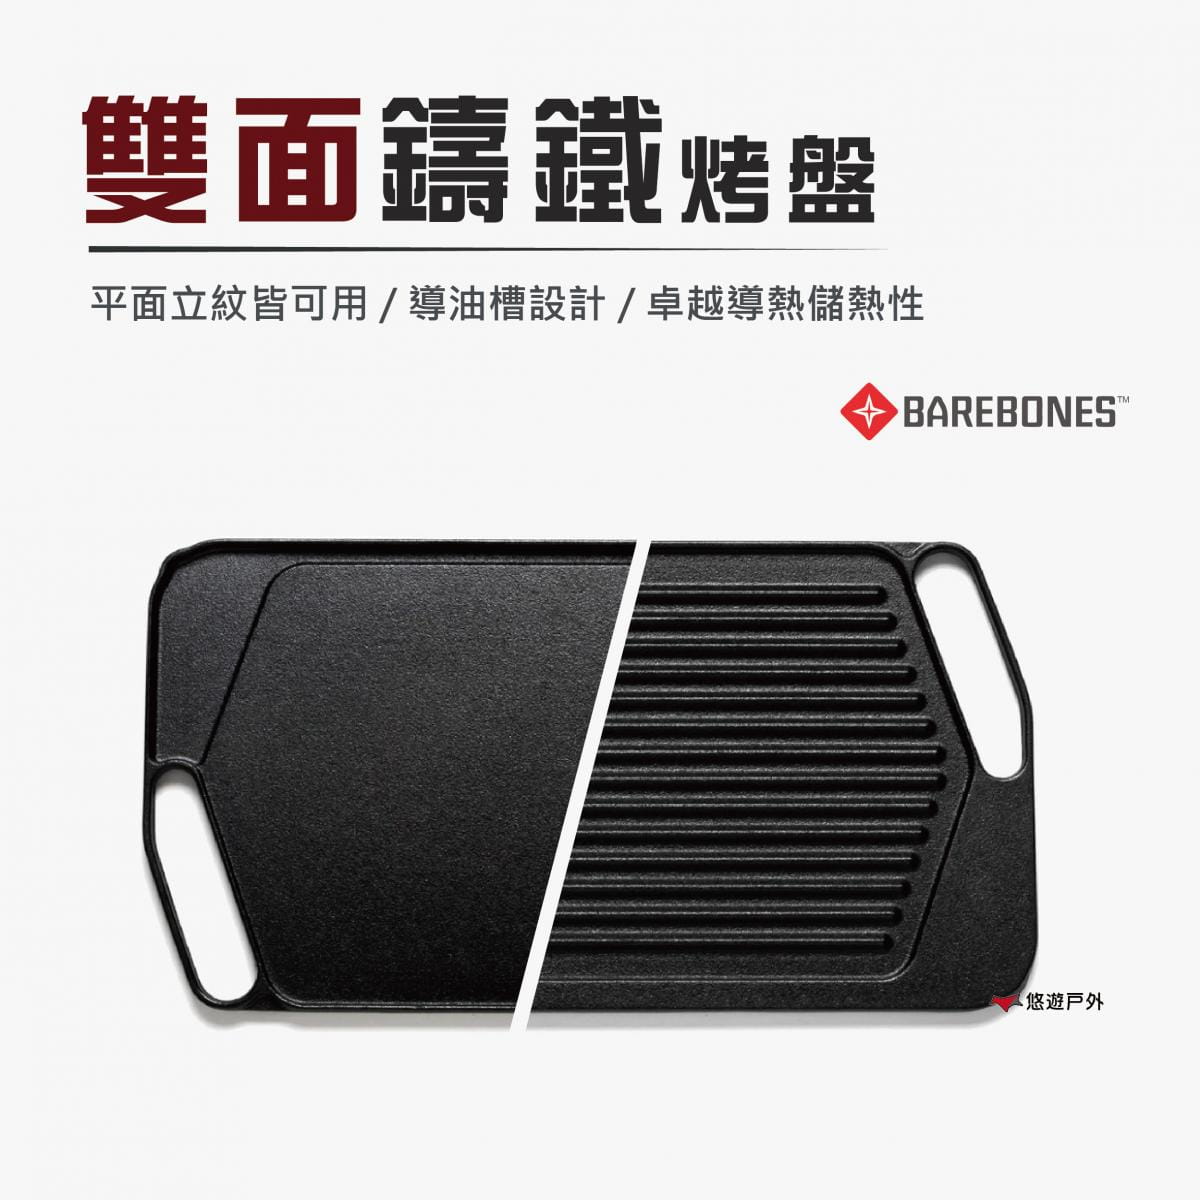 【Barebones】雙面鑄鐵烤盤 CKW-313 (悠遊戶外) 0